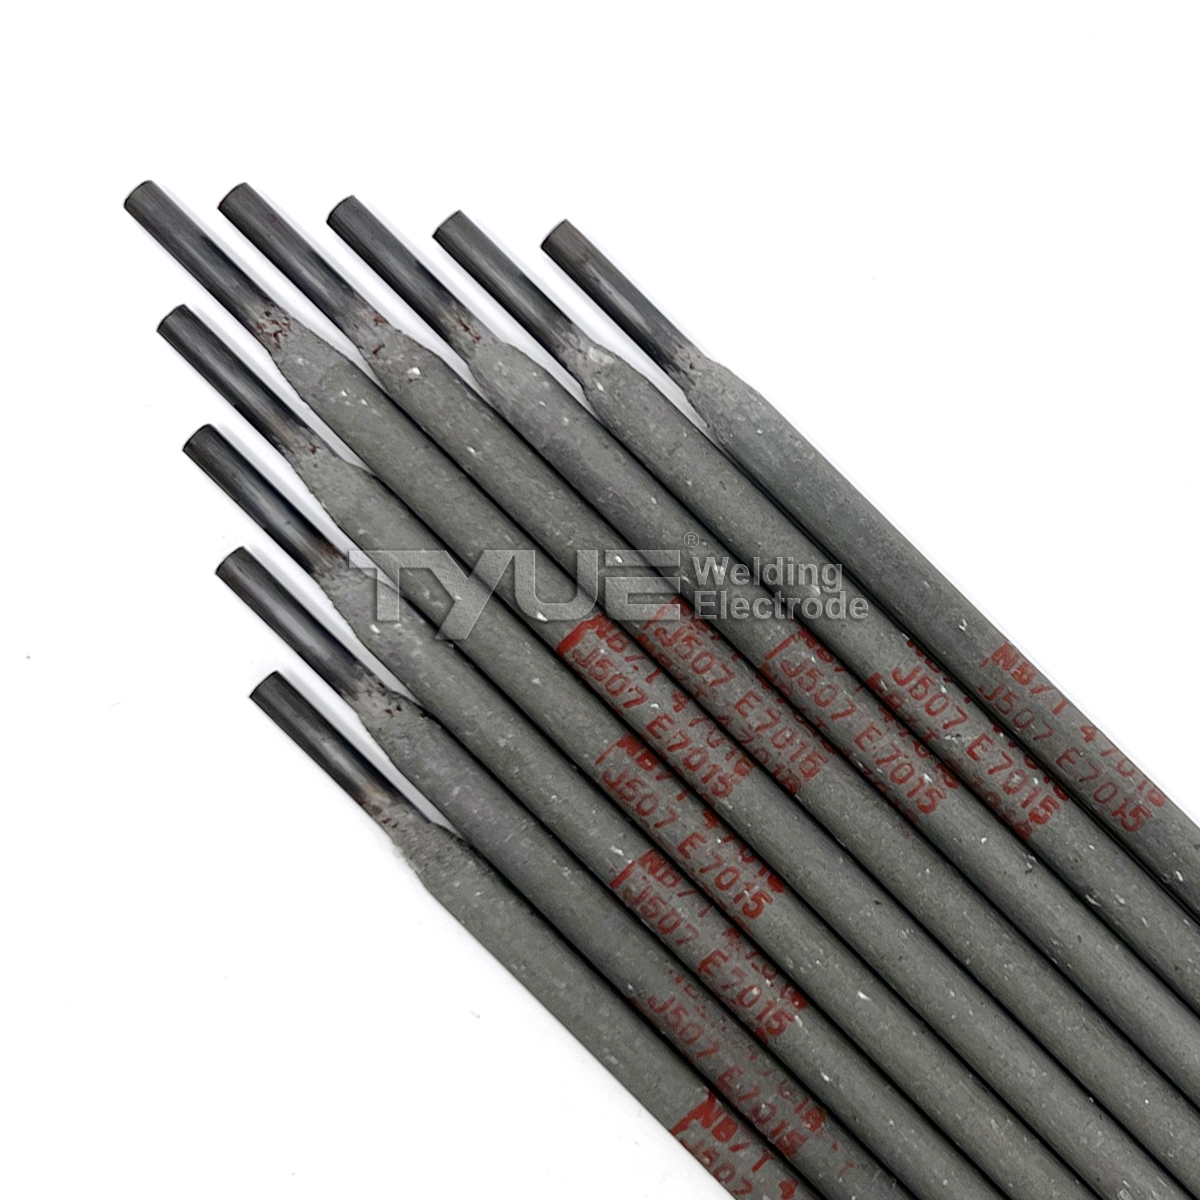 Tyue Brand Carbon Karfe Acr Electrode AWS E7015 Welding Rods Low Hydrogen